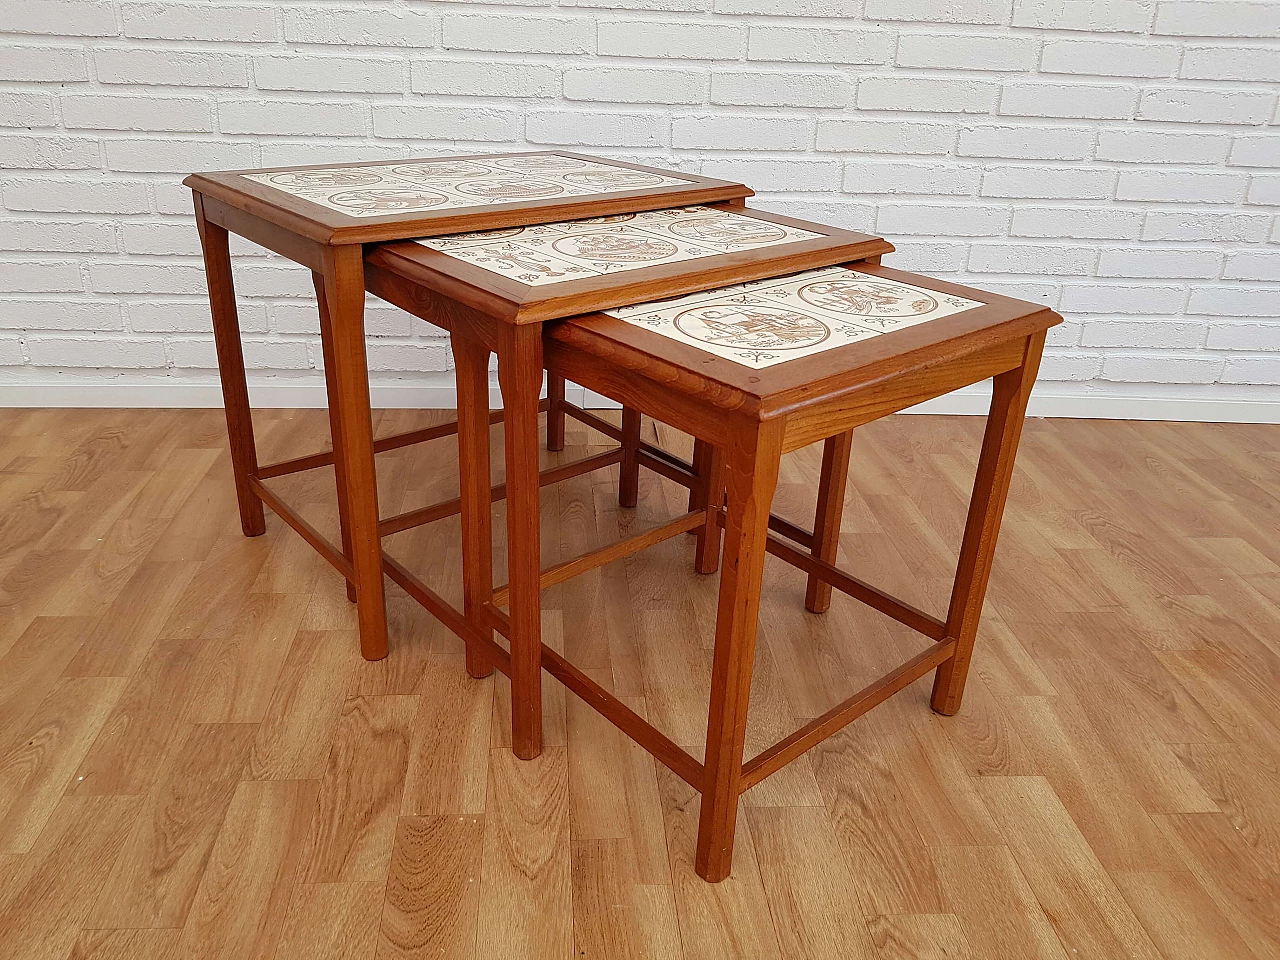 Nesting table, 60s, danish design, hand-painted ceramic tiles, teak wood 1064944